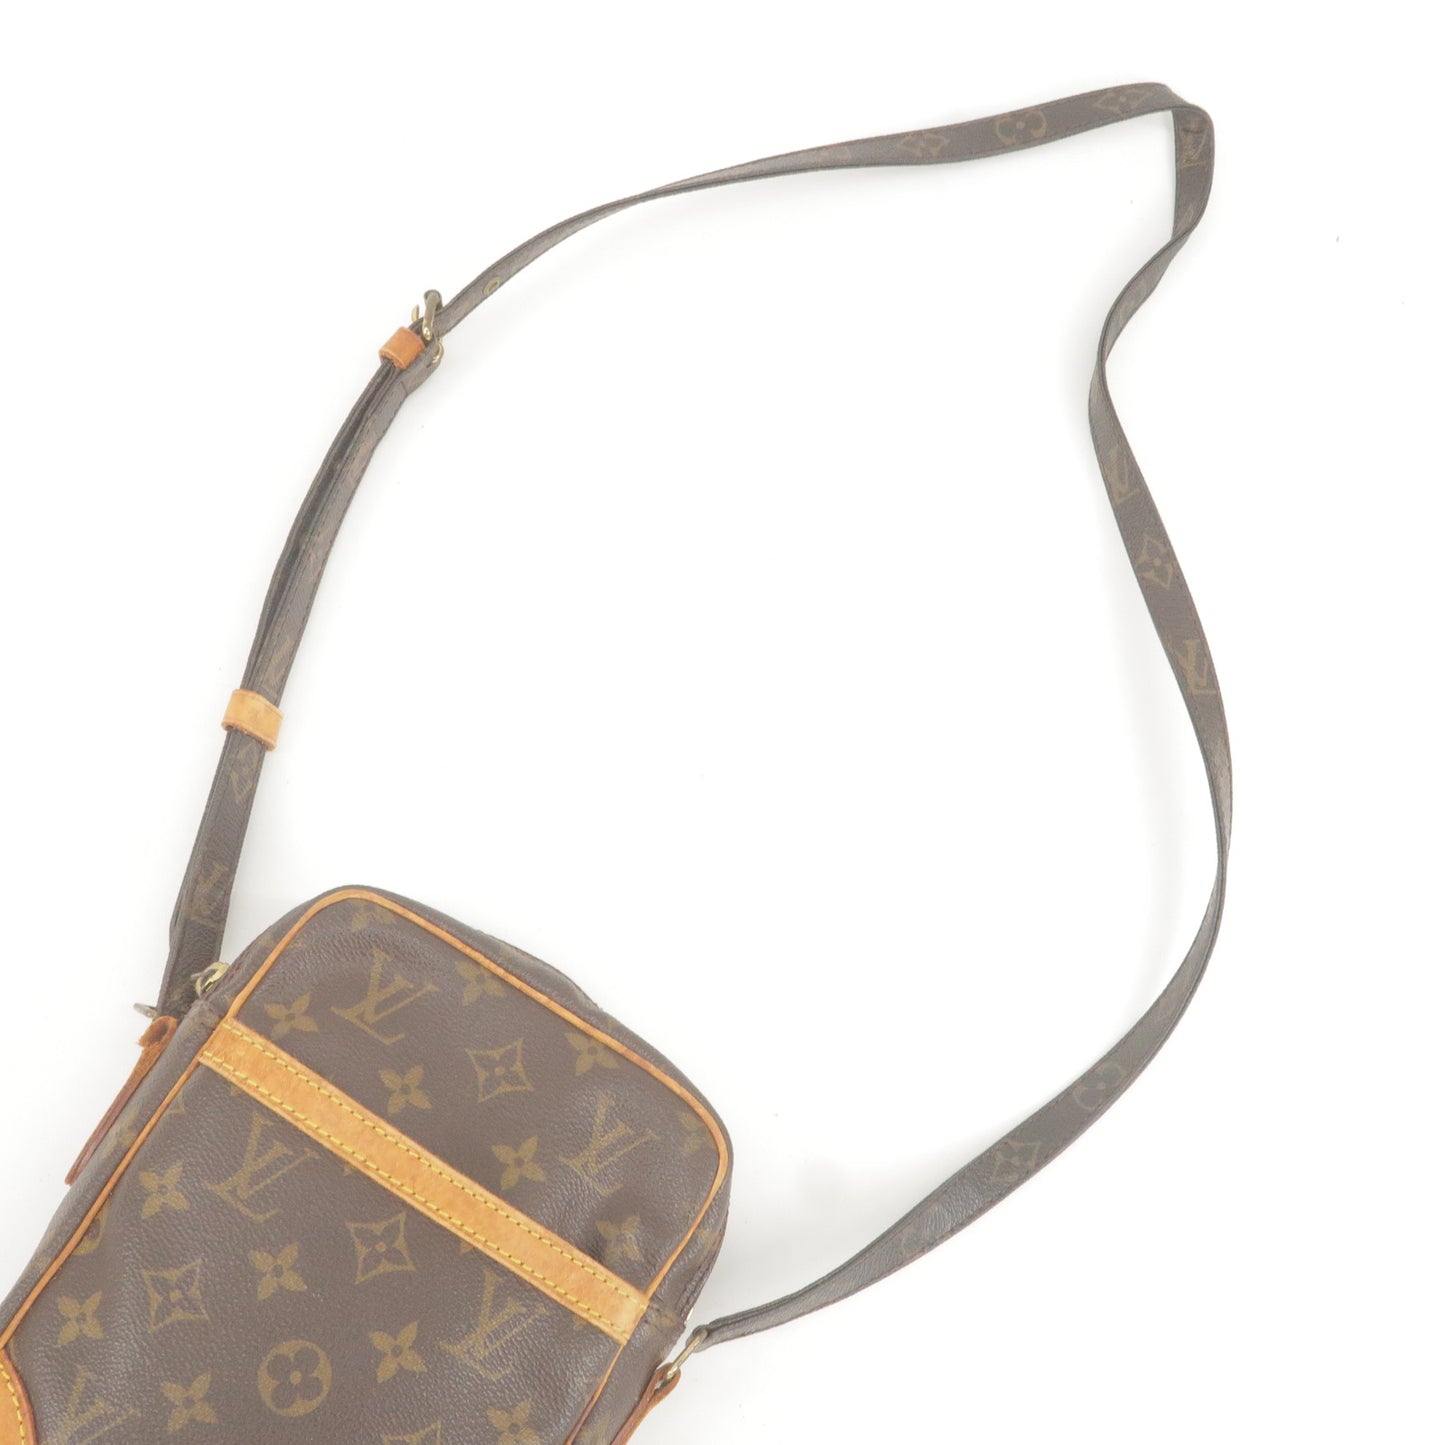 Louis Vuitton Danube Shoulder bag 366524